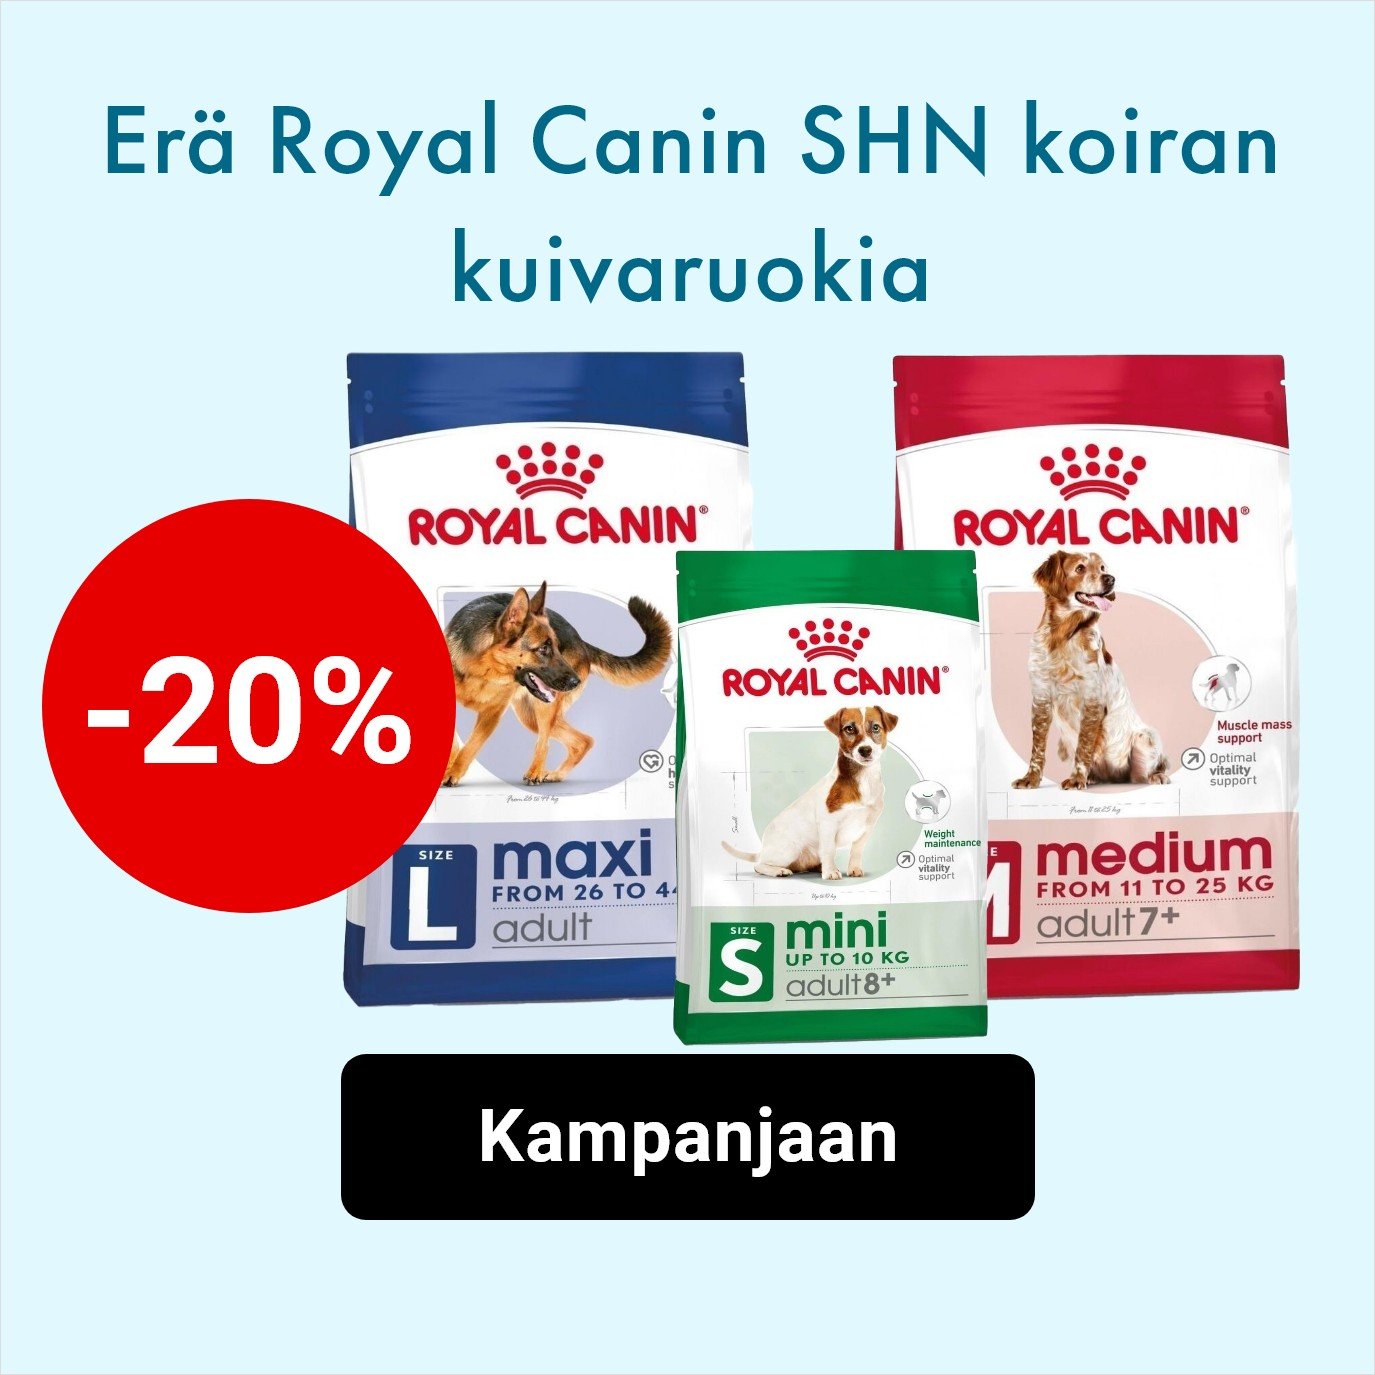 -20% Erä Royal Canin SHN koiran kuivaruokia 8-15kg